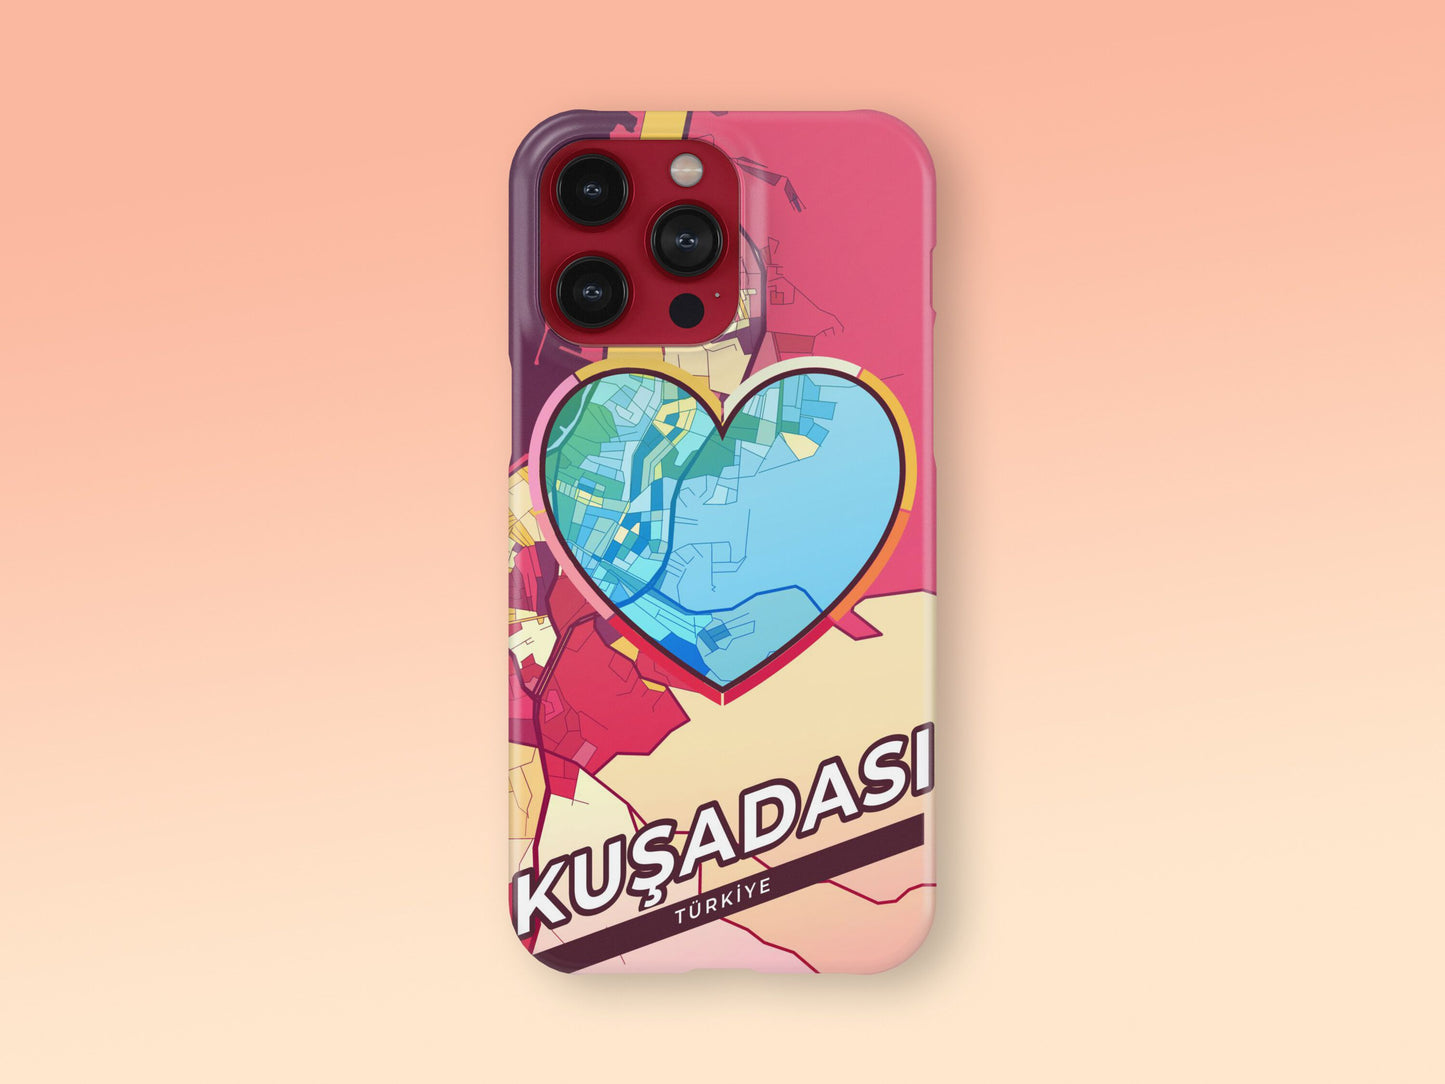 Kuşadası Turkey slim phone case with colorful icon. Birthday, wedding or housewarming gift. Couple match cases. 2